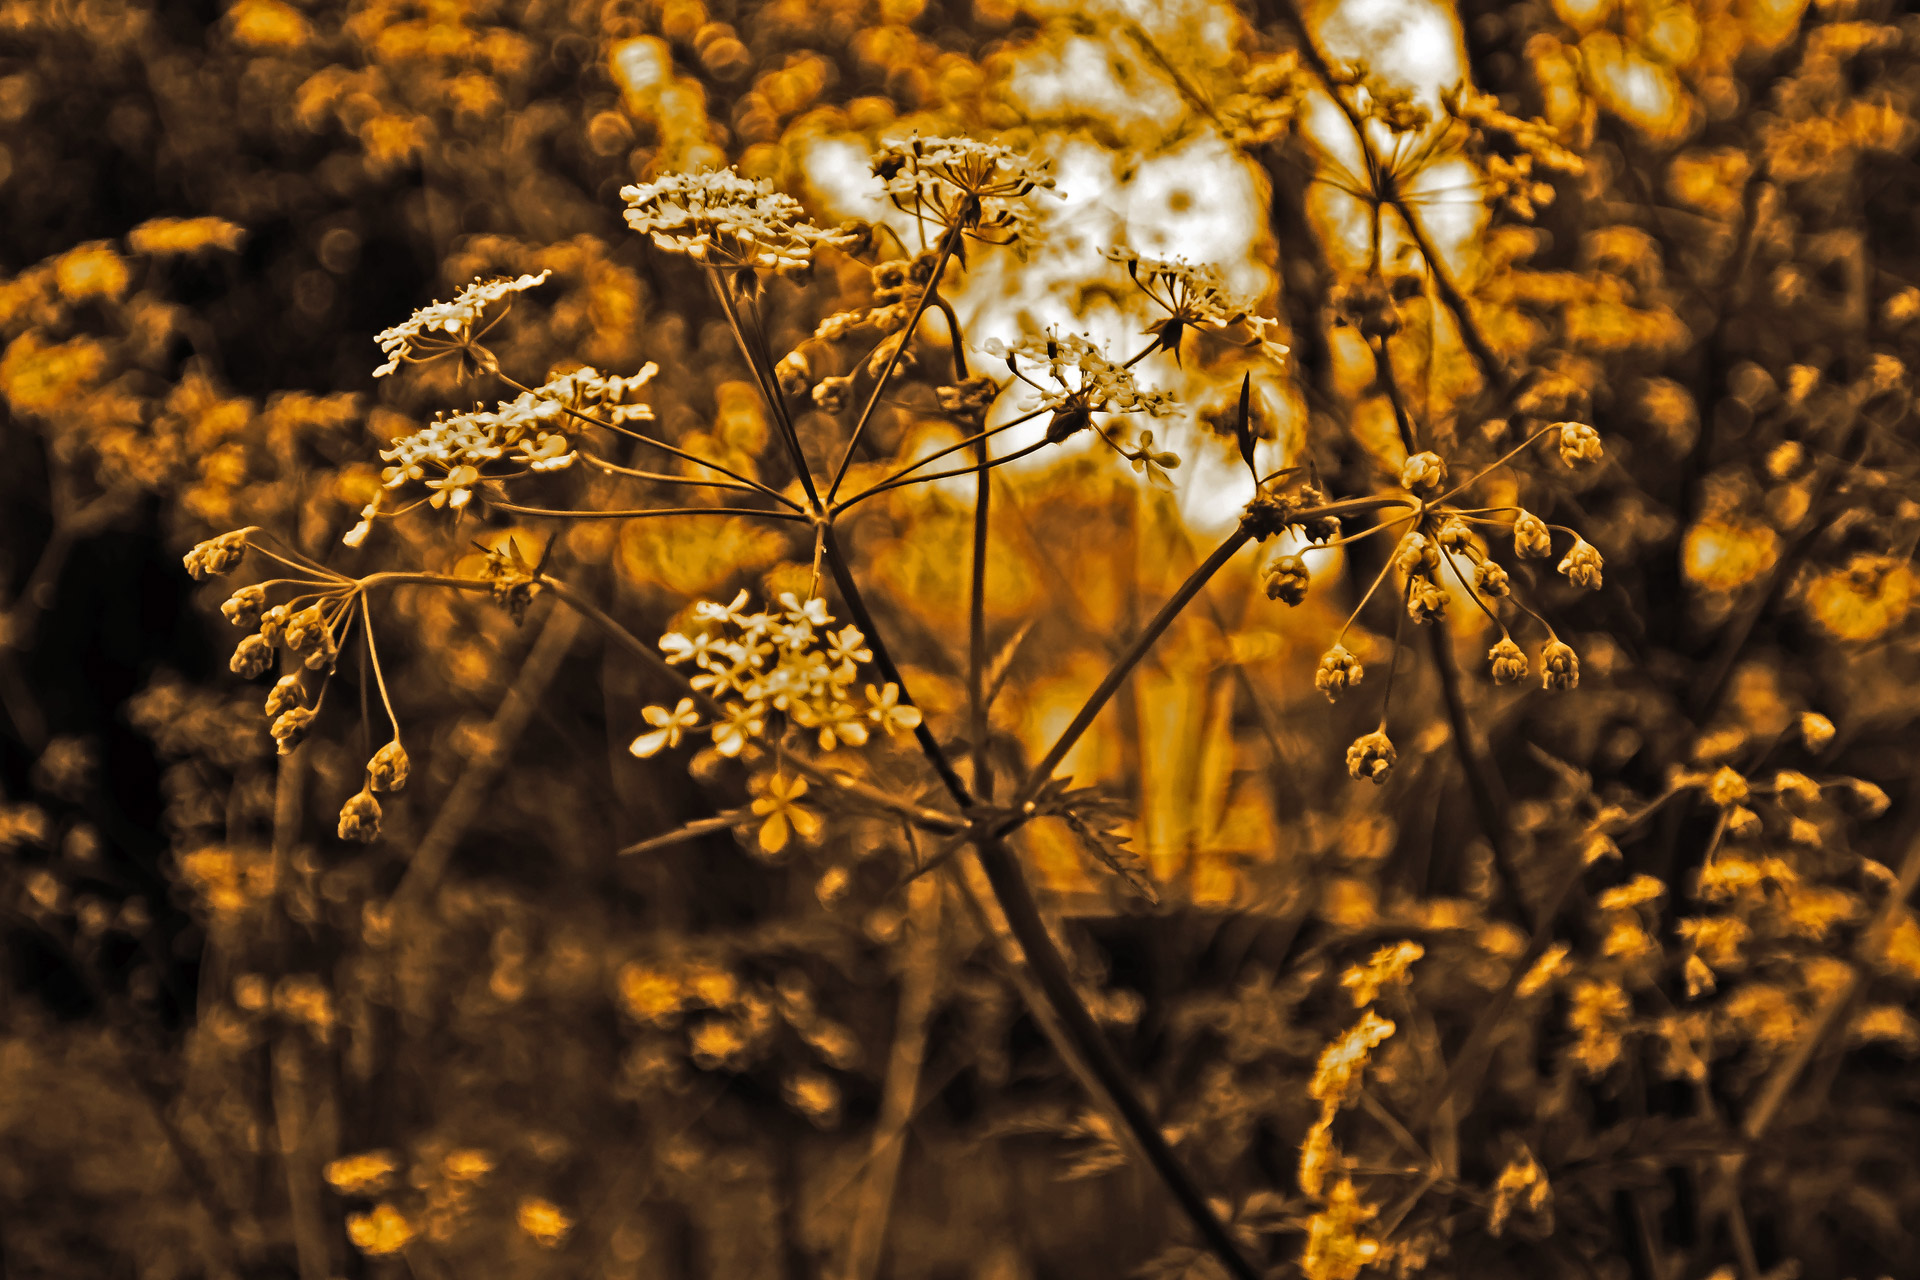 plant-macro-nature-seasons-spring-free-image-from-needpix